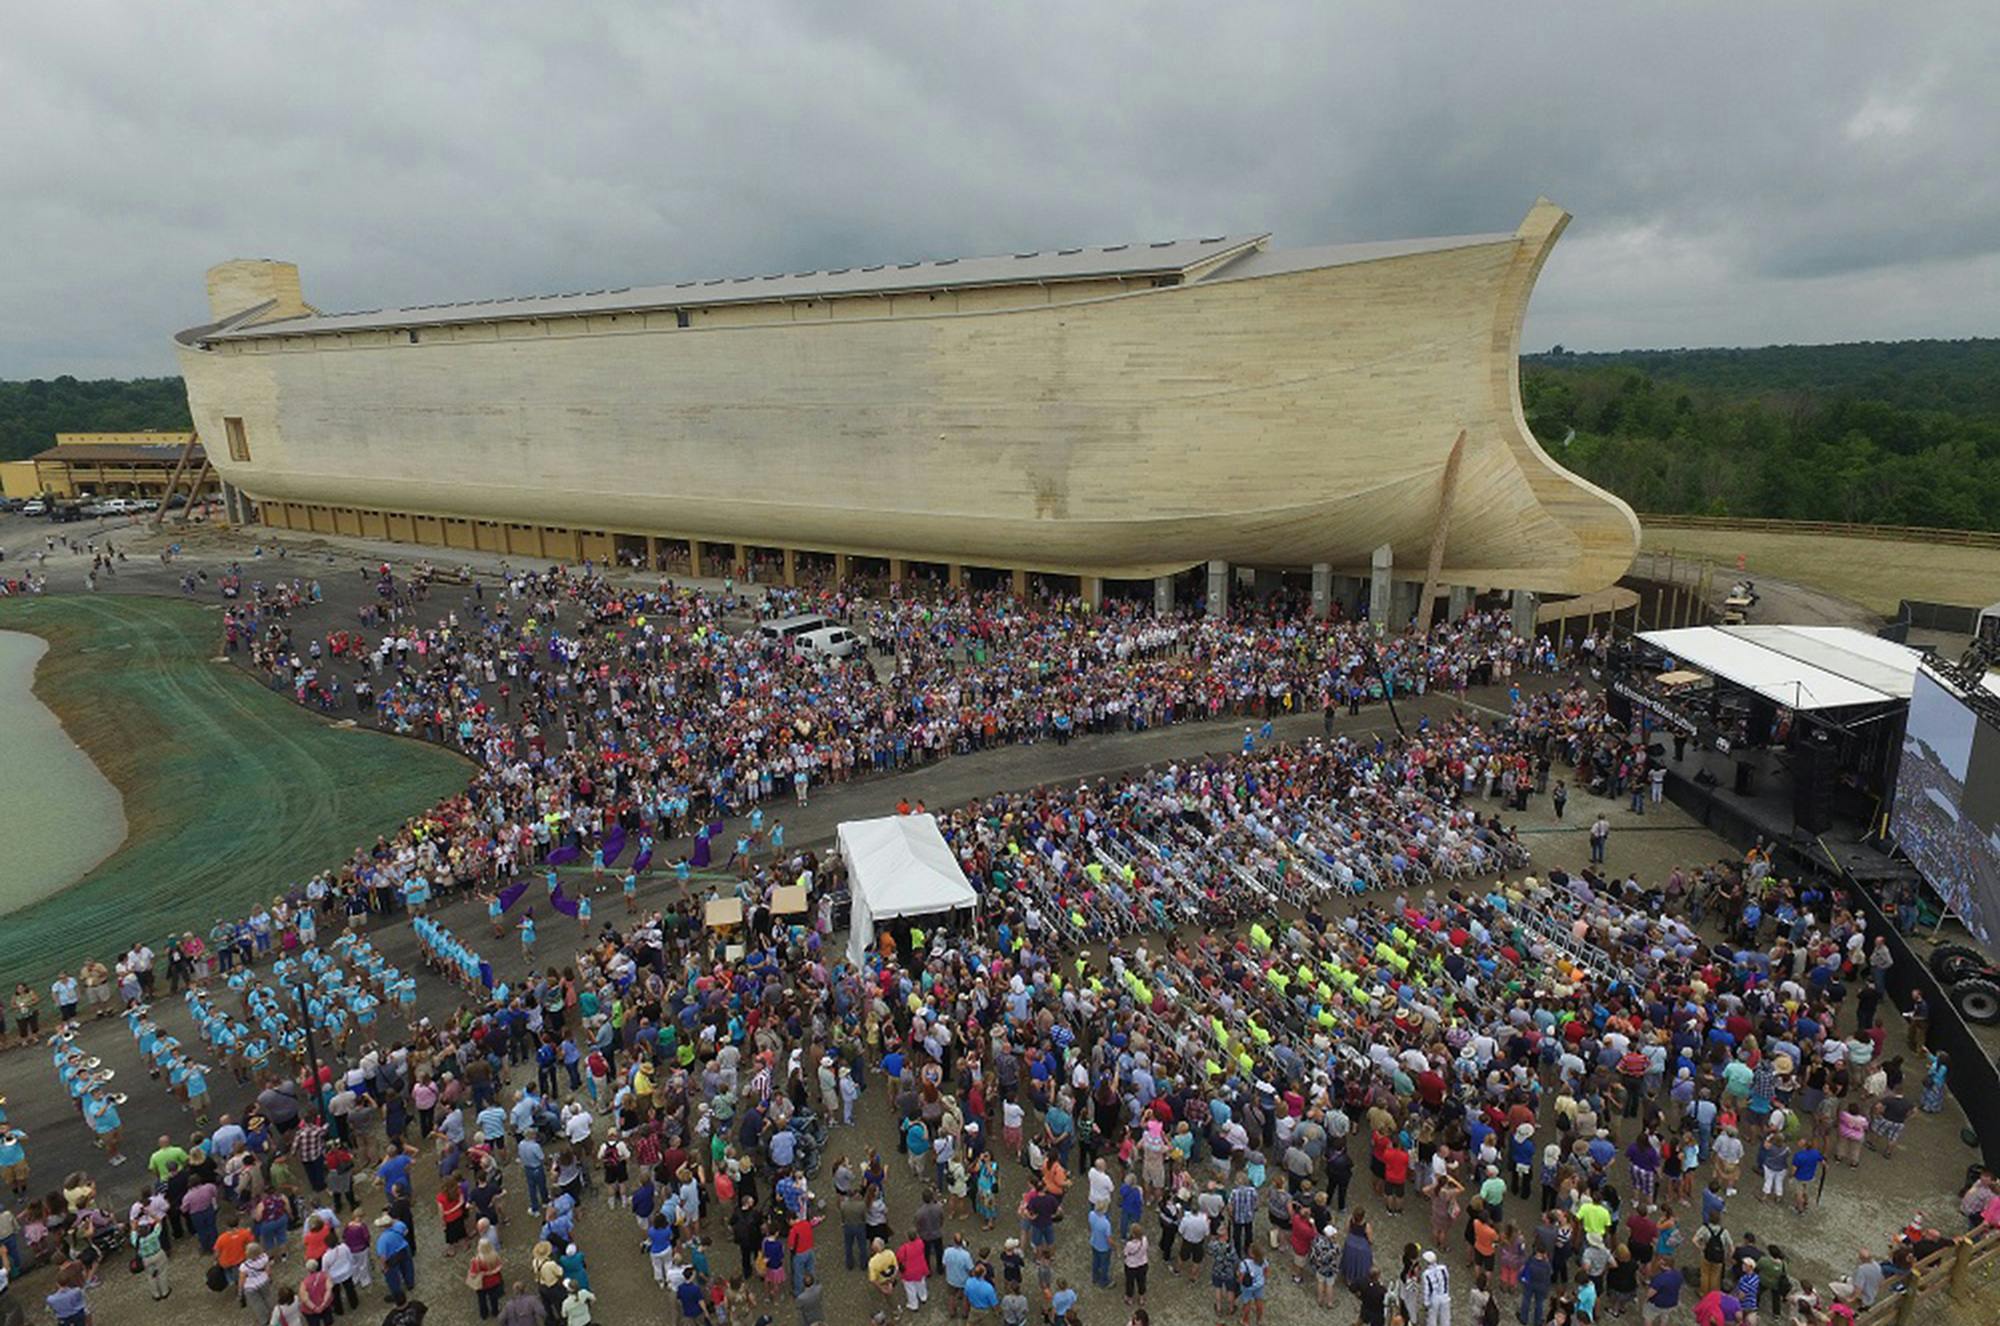 Noah's Ark in Kentucky must be seen to be believed